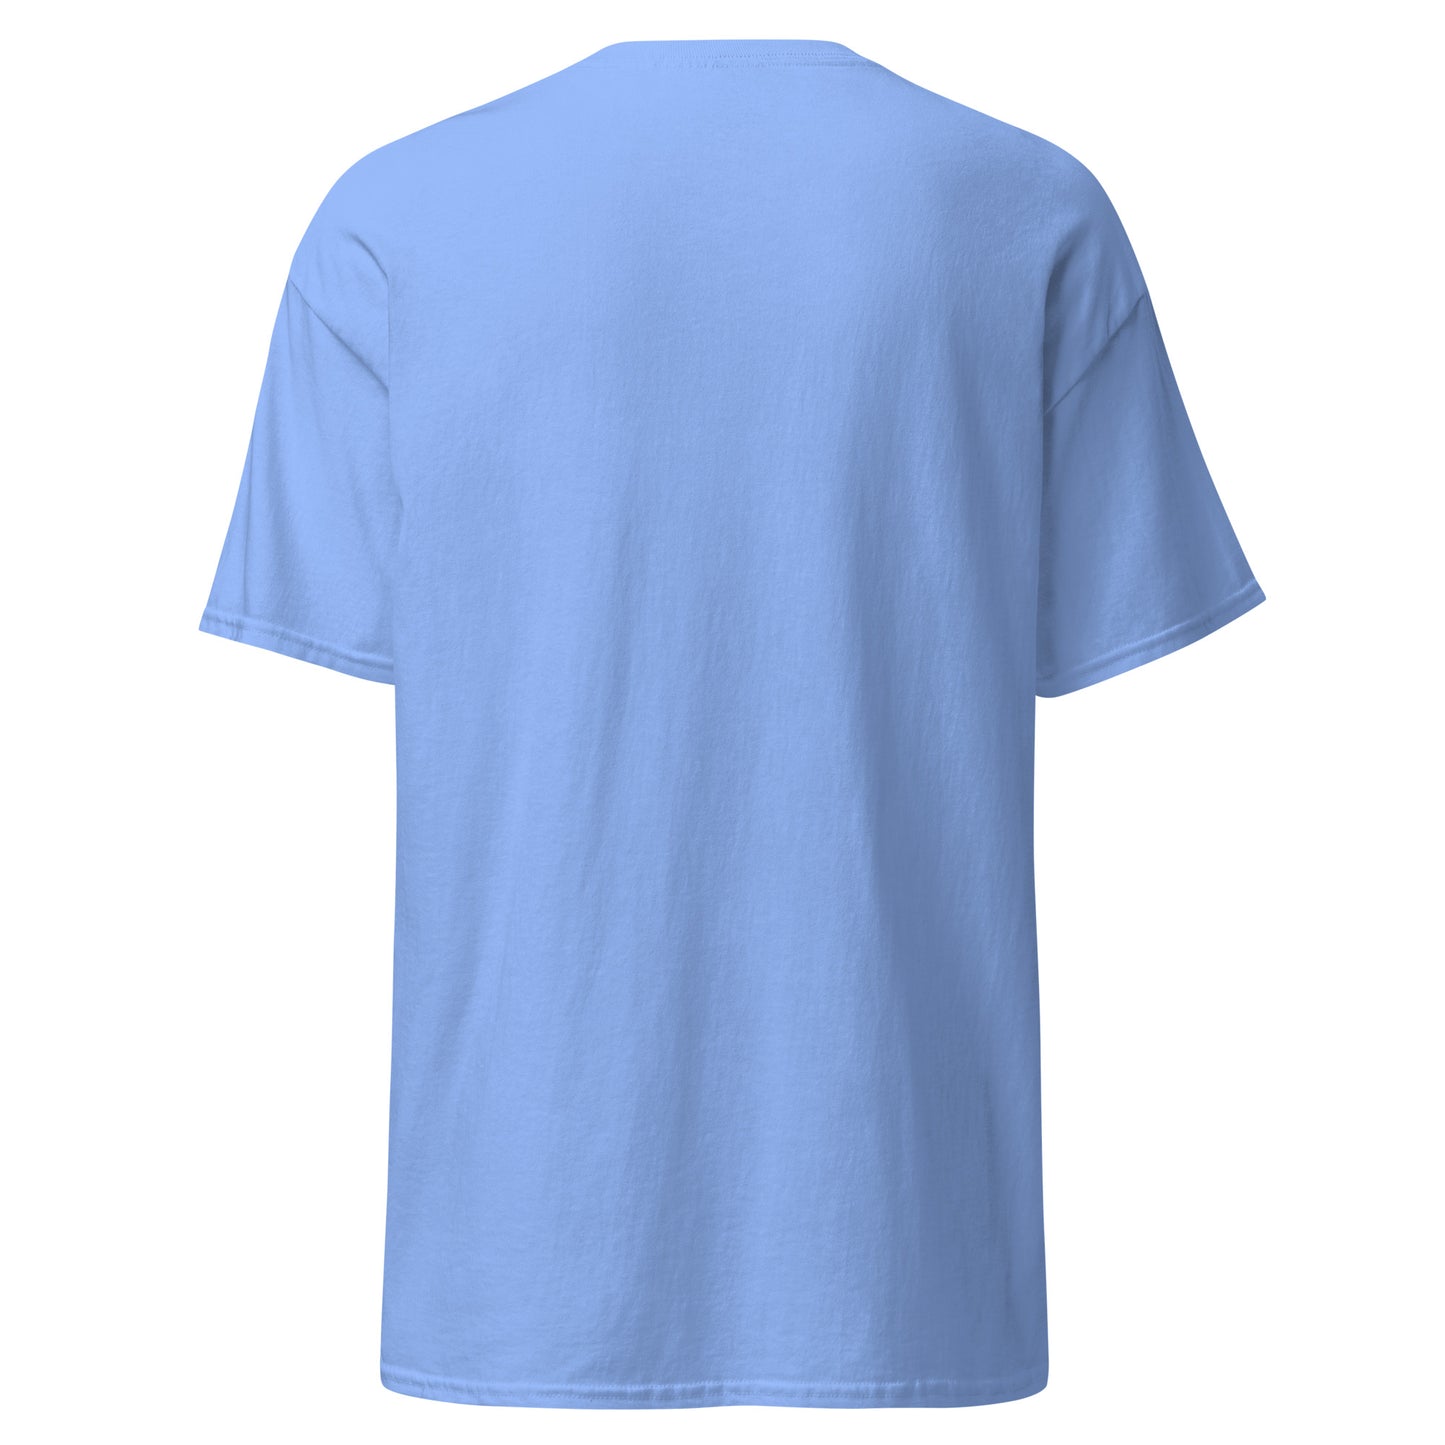 Customizable T-Shirt Front Print